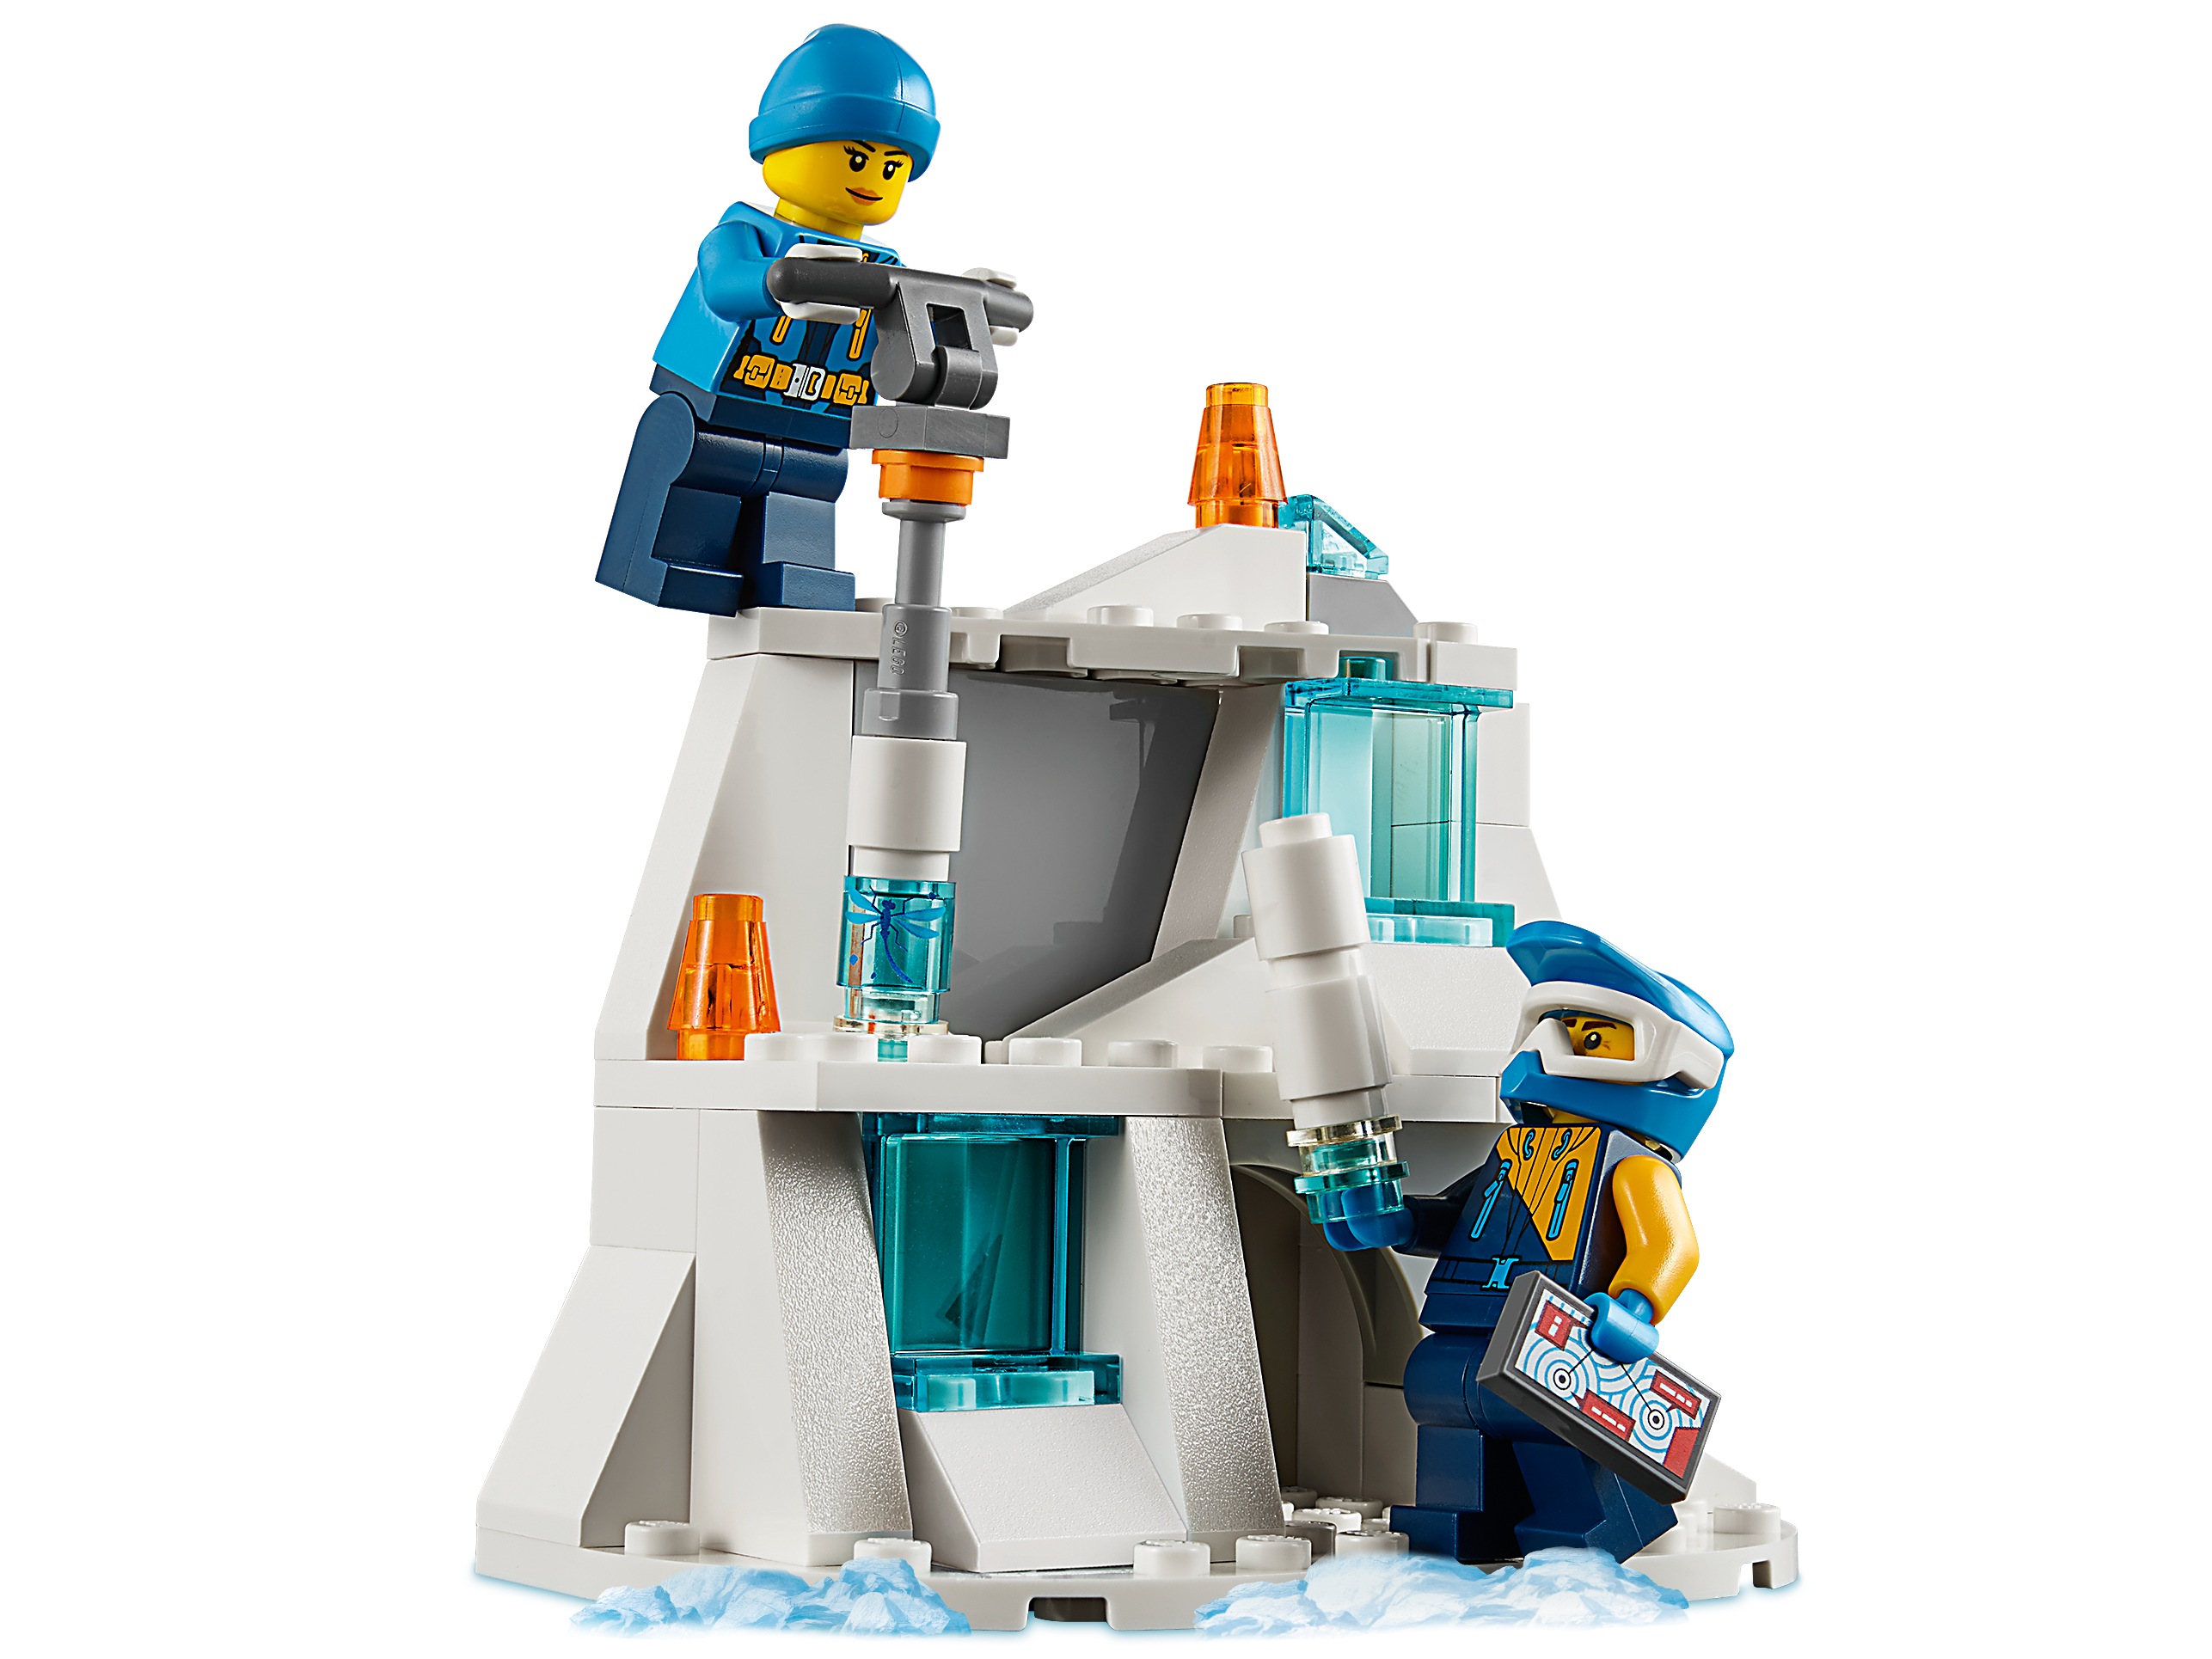 Arctic Scout 60194 | City | online at Official LEGO® Shop US